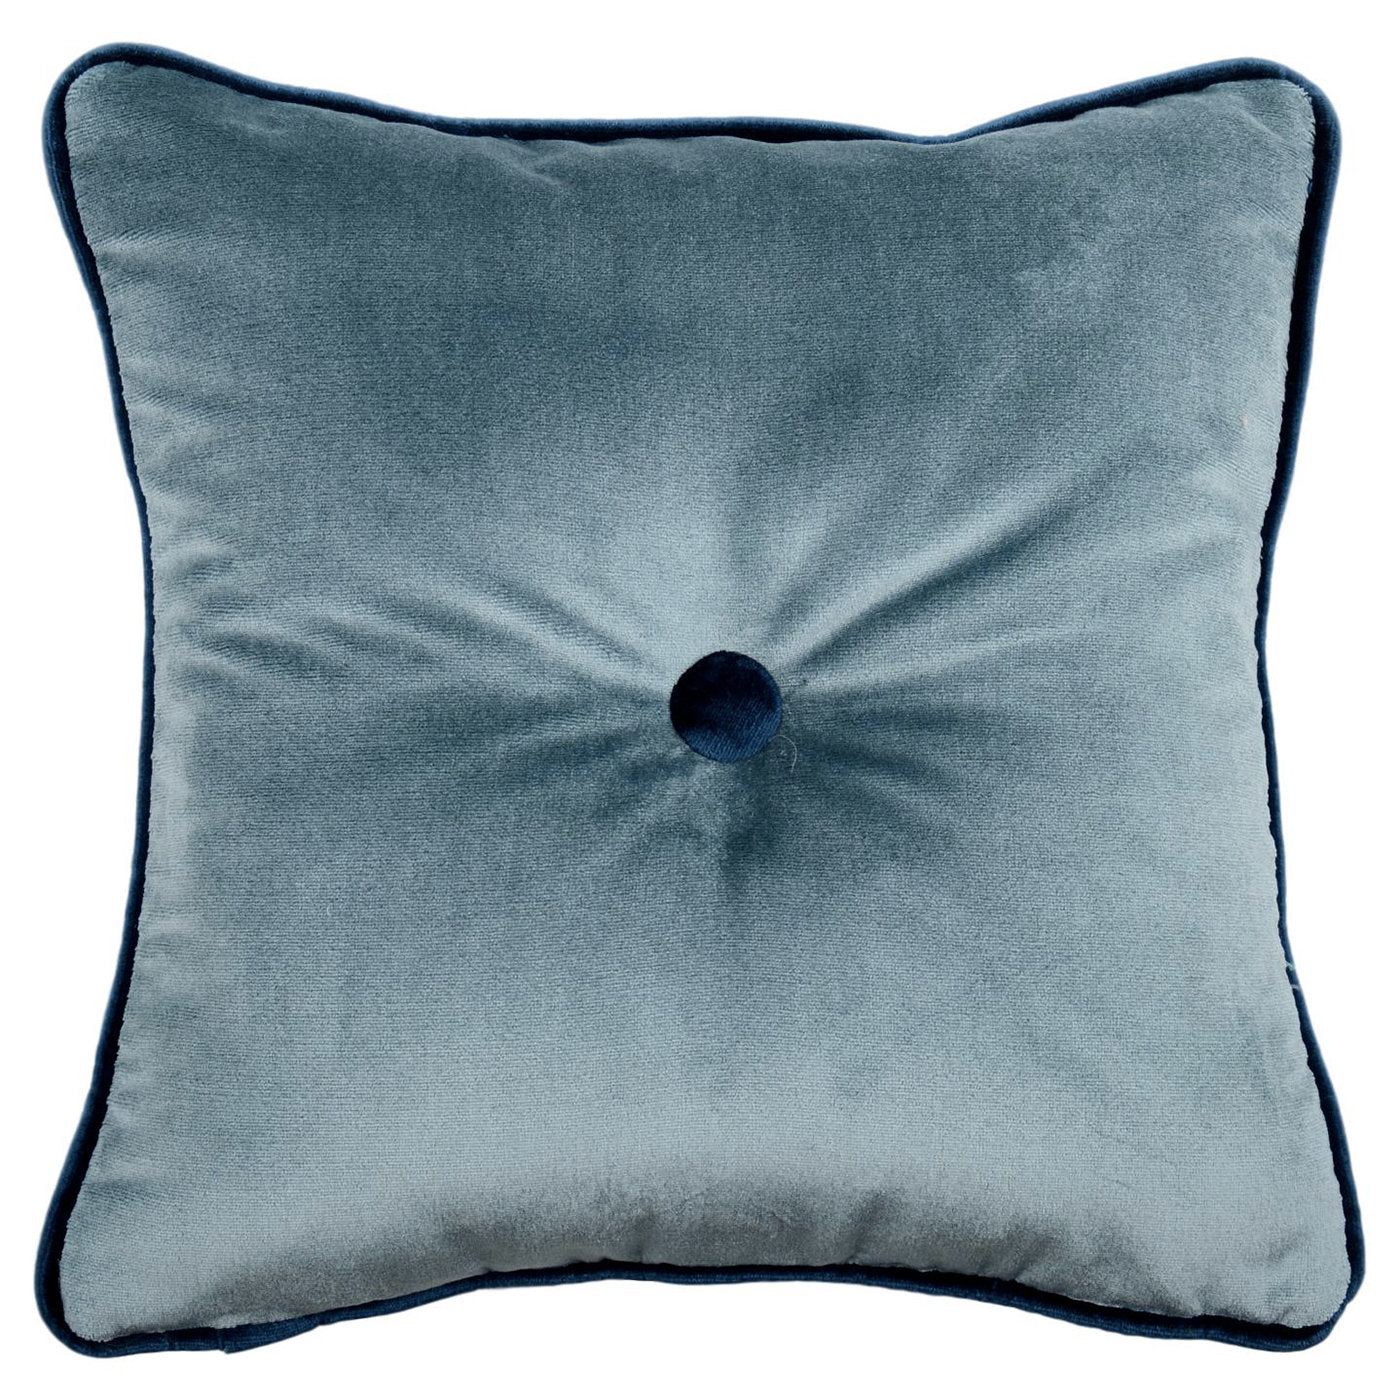 Blue-Grey Carré Cushion in striped jacquard fabric - Alternative view 1